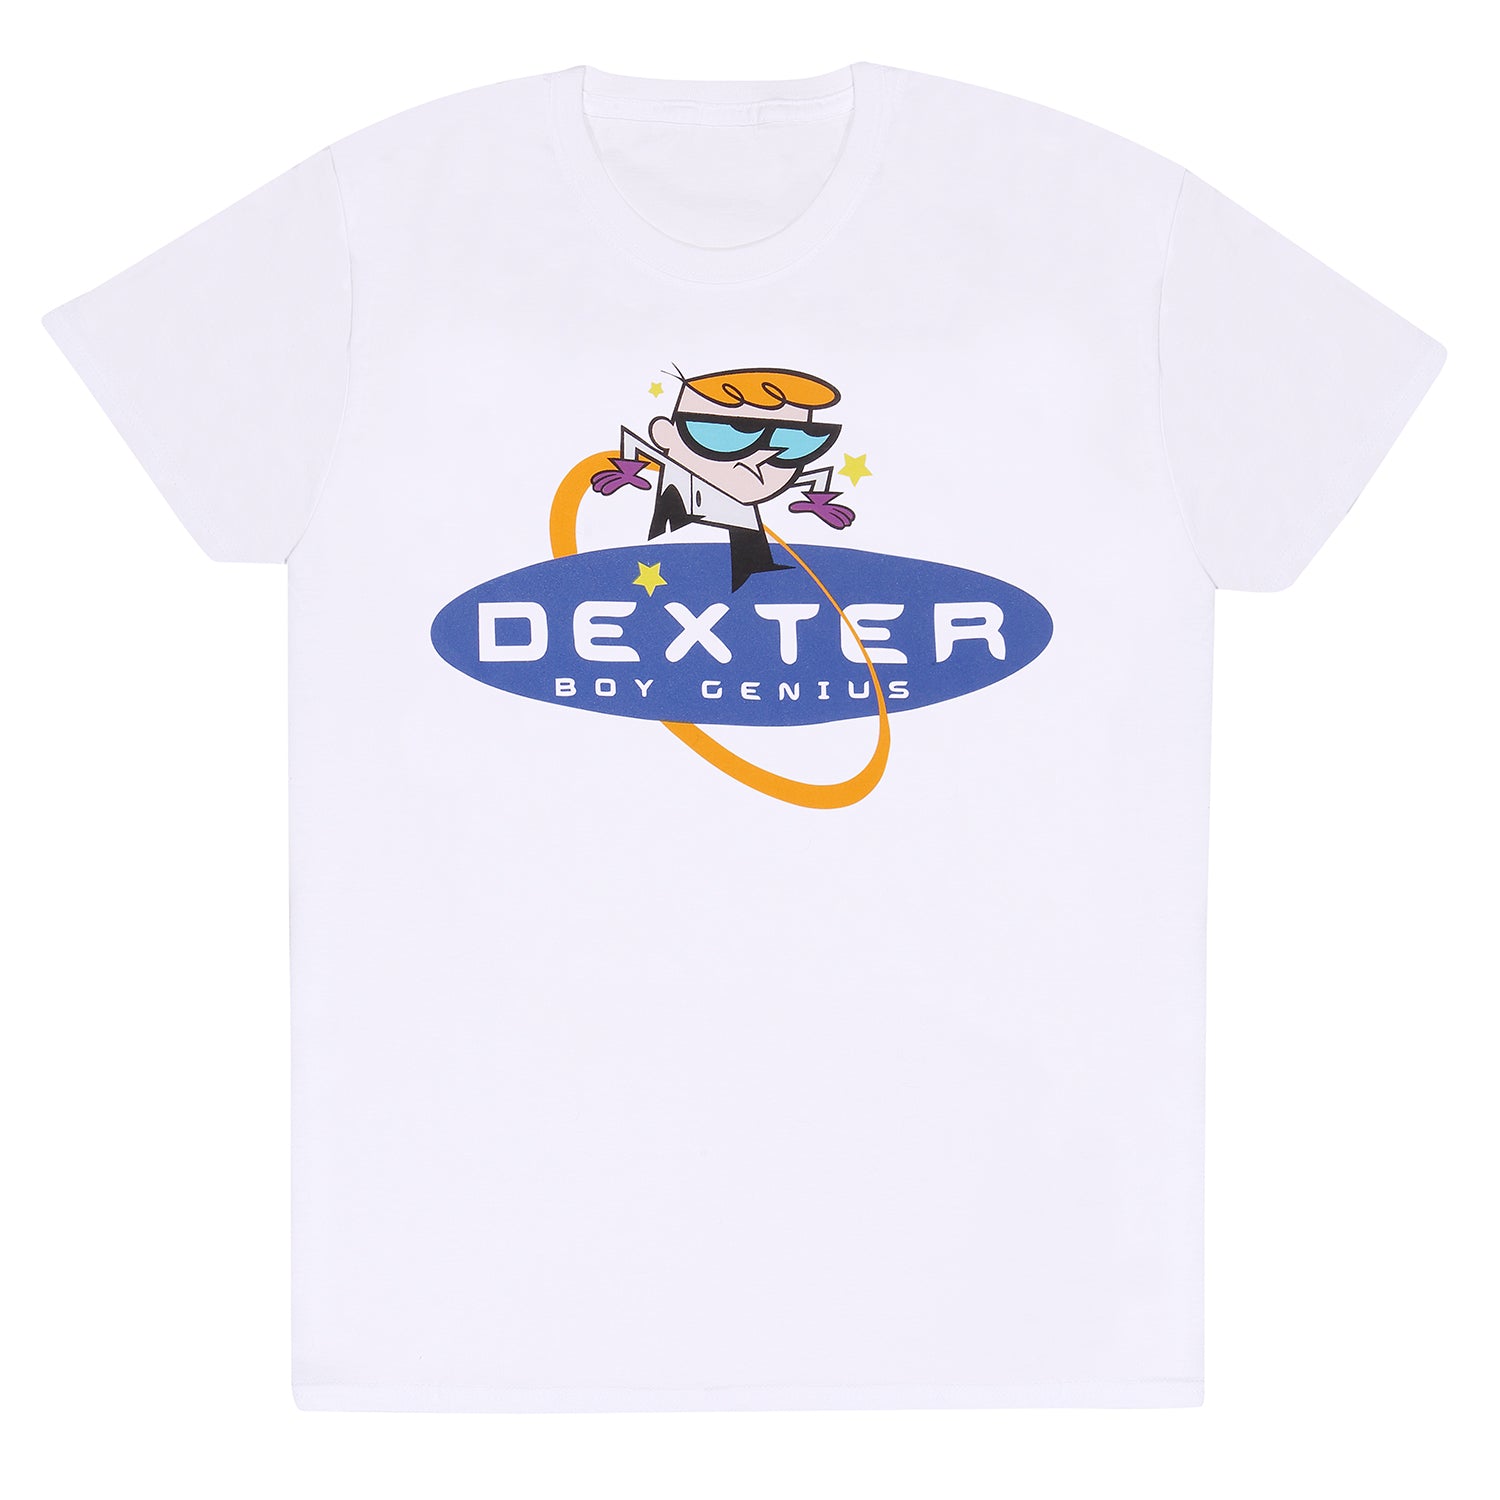 Dexters Laboratory Boy Genius T-Shirt